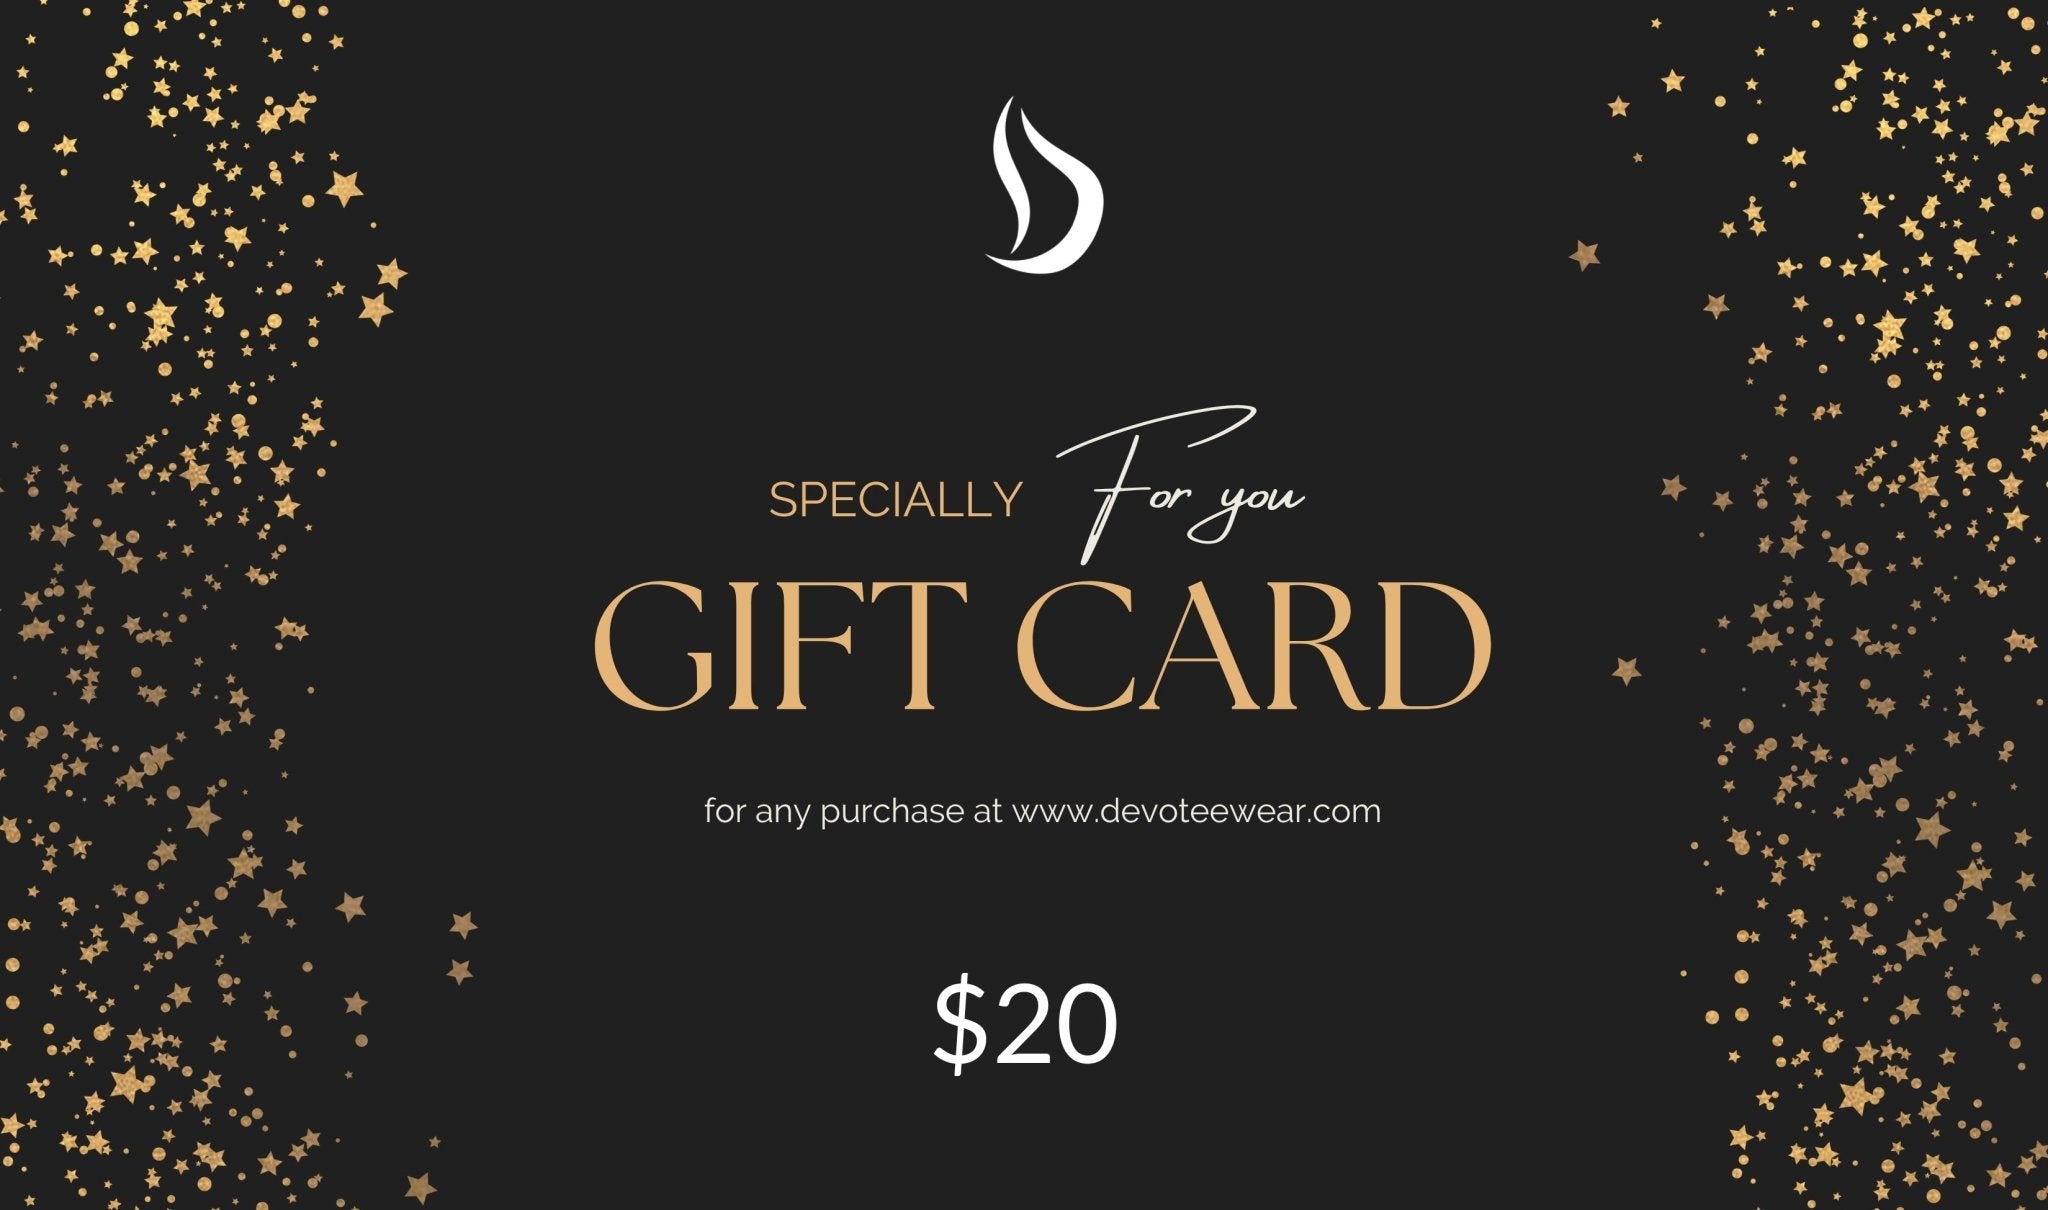 Free $20 Gift Card